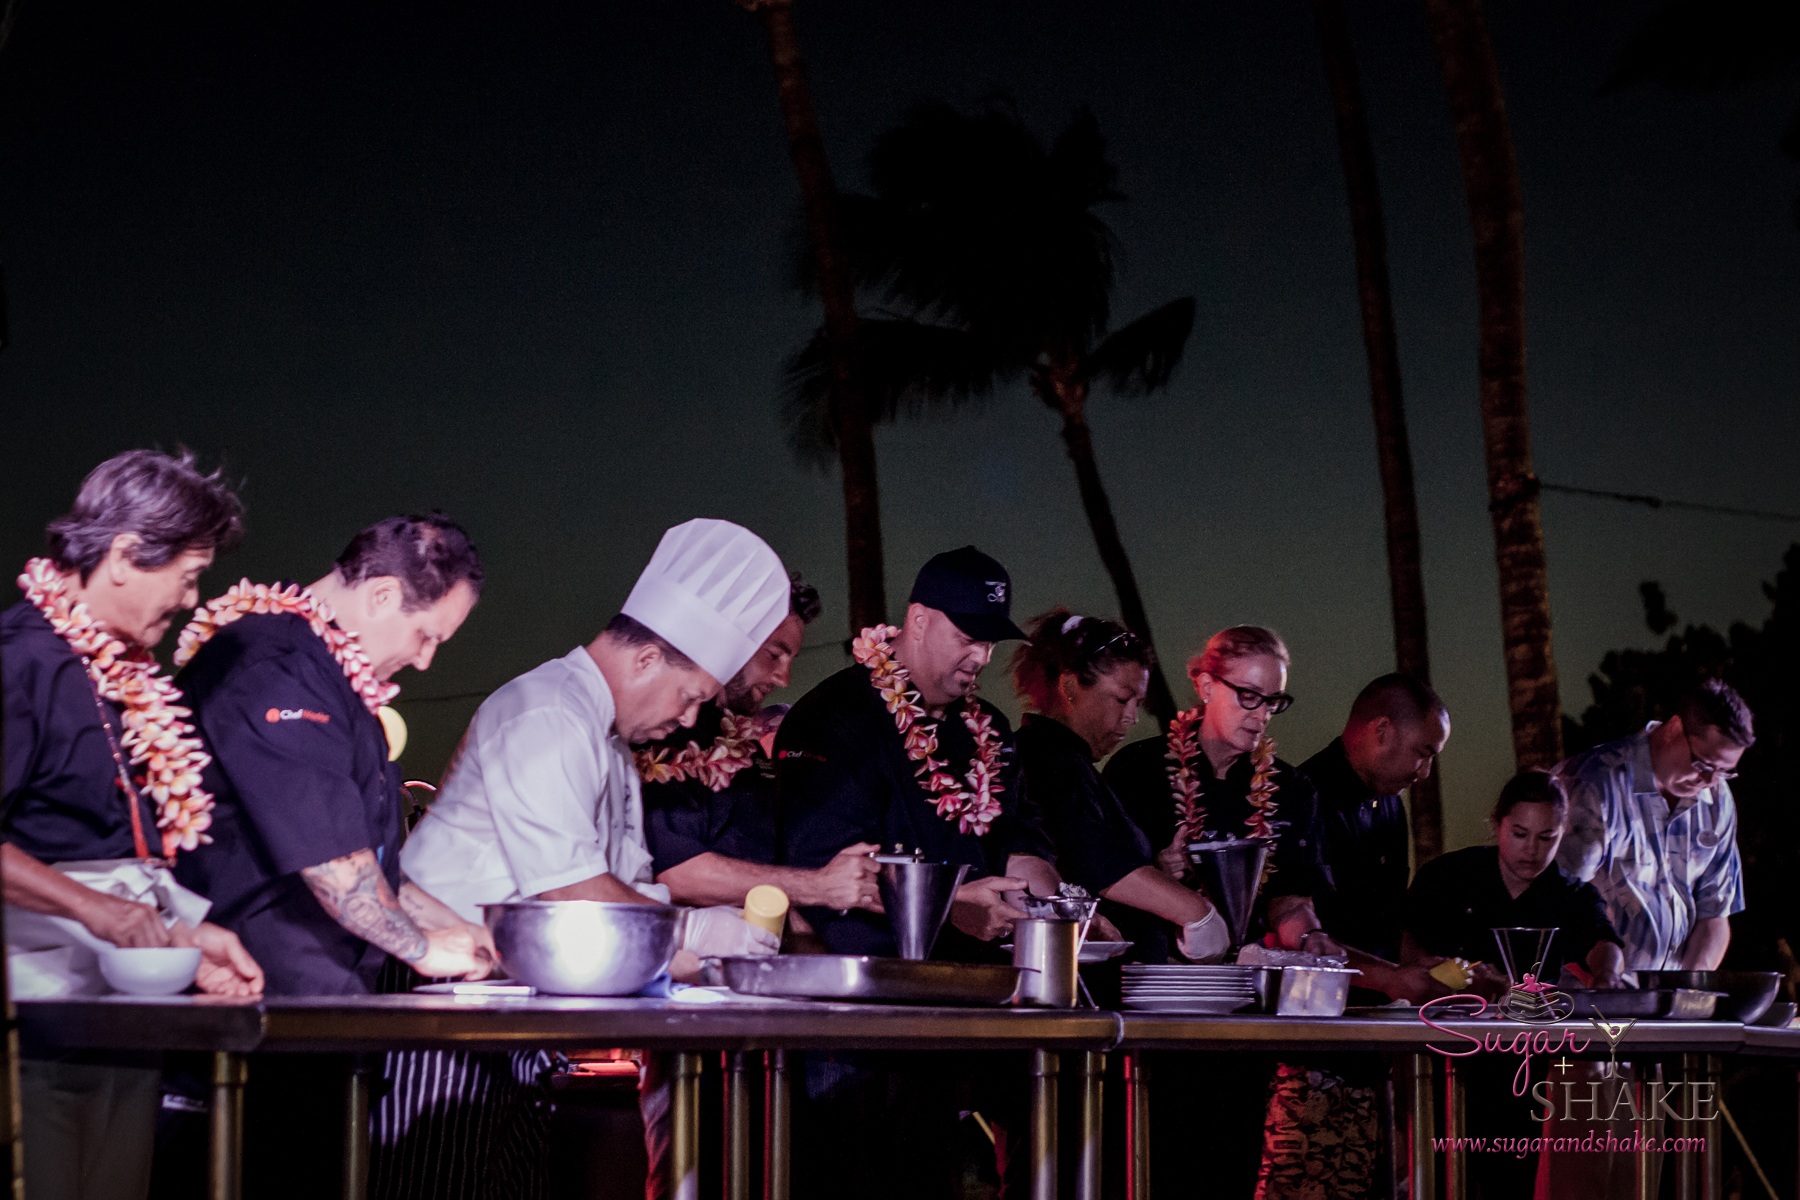 Mālama Maui participating chefs (in black, with lei) from left to right: Hiroyuki Sakai, Rick Tramonto, Marcel Vigneron, Greg Grohowski, Bev Gannon. © 2013 Sugar + Shake